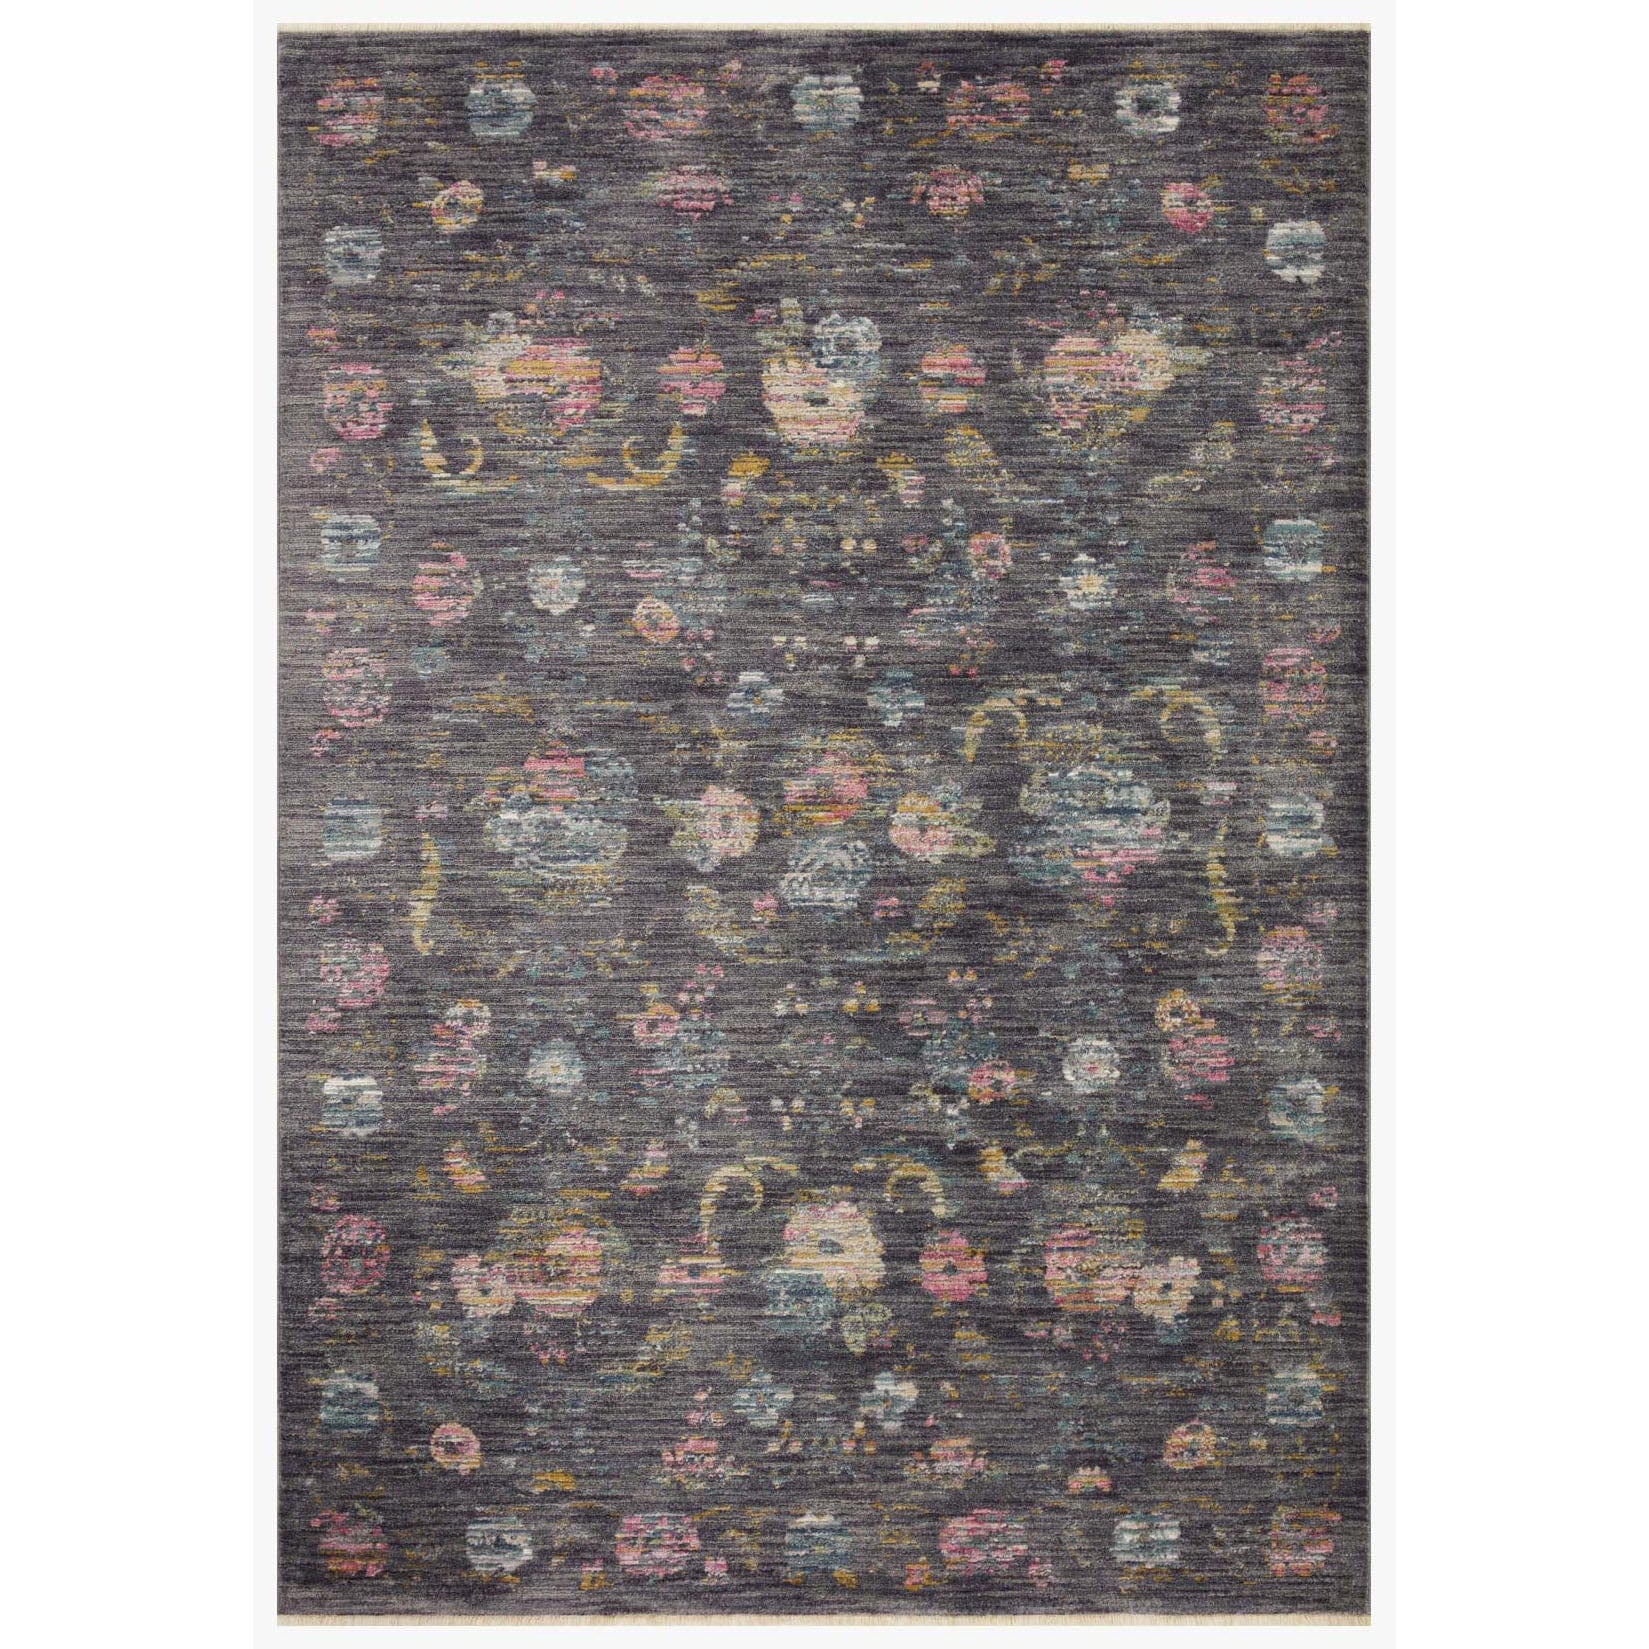 louis vuitton Living room carpet rugs – Pixeltee